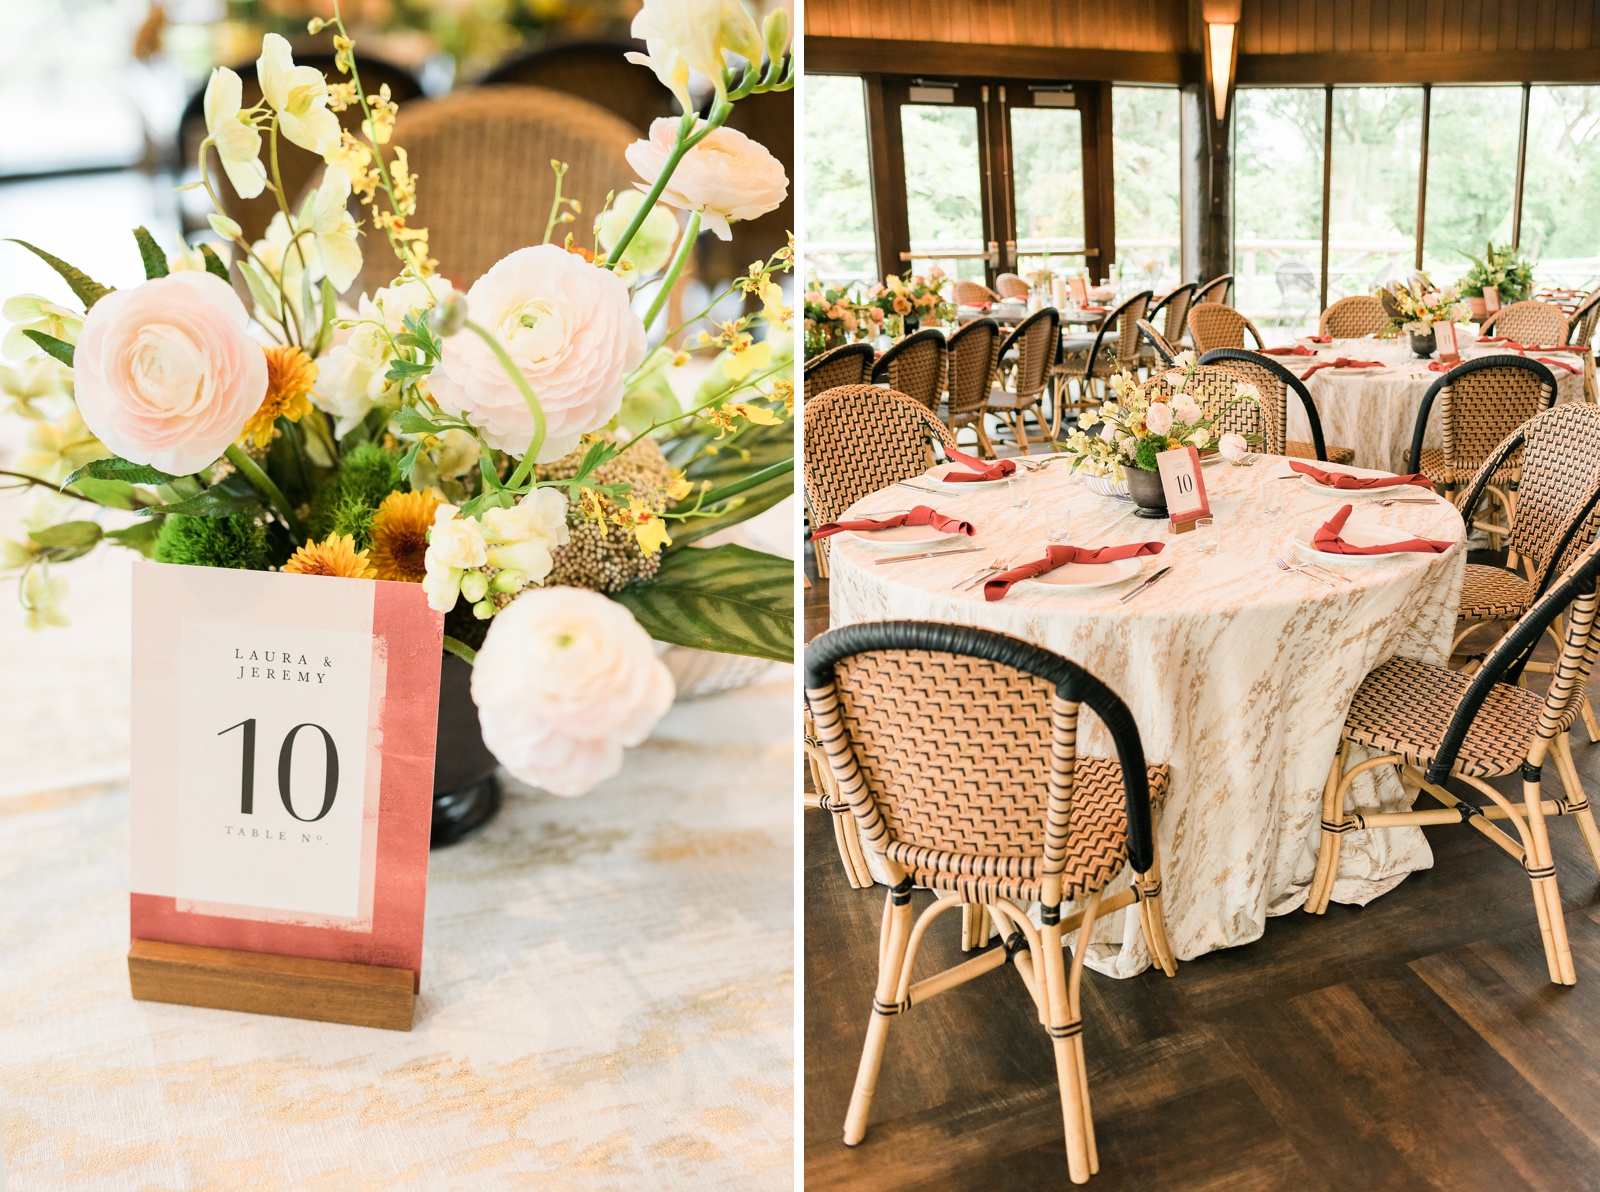 Floral arrangement and wedding reception table.